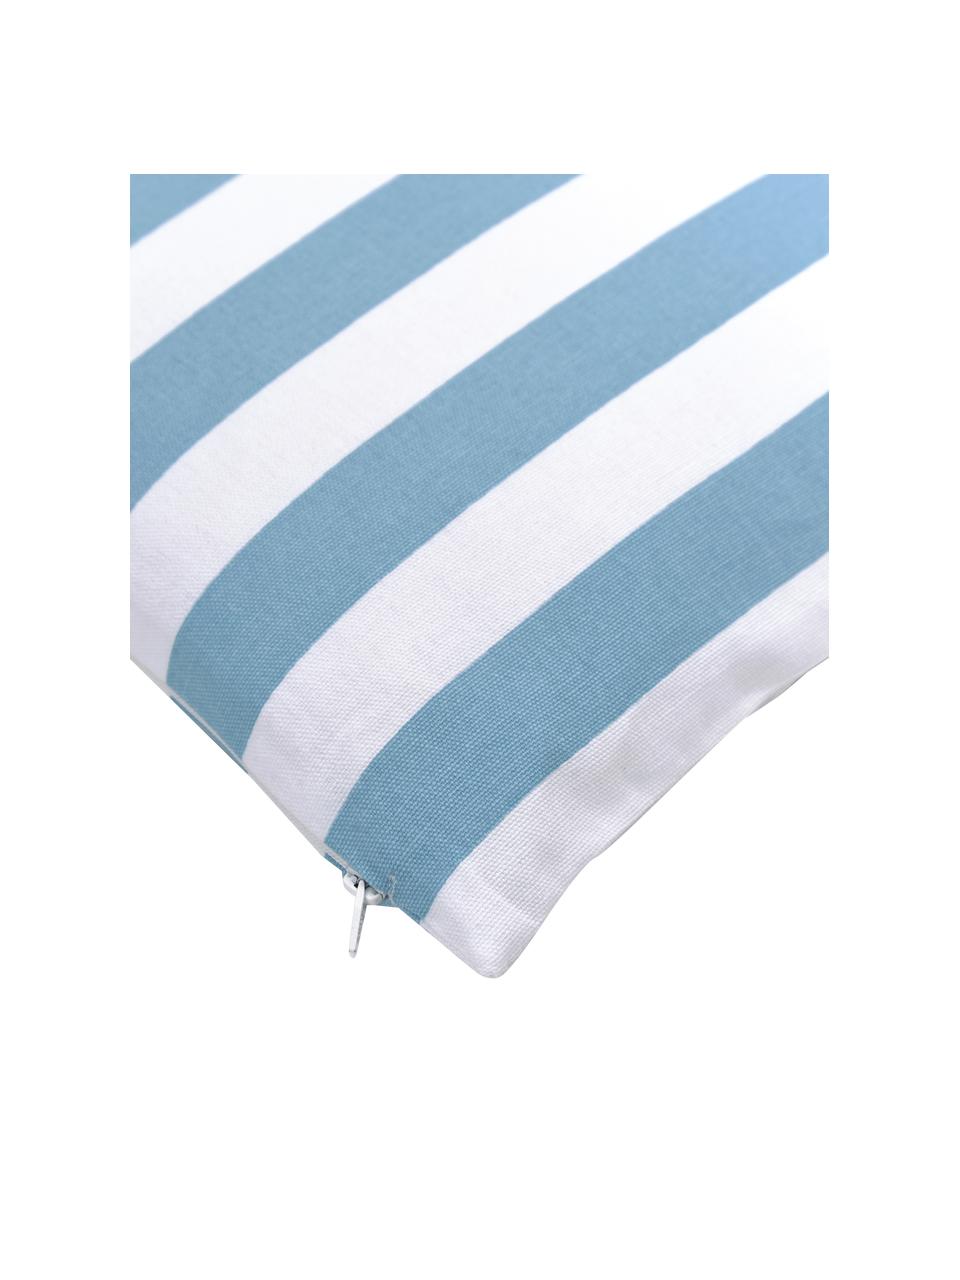 Federa arredo a righe color blu/bianco Timon, 100% cotone, Blu, bianco, Larg. 30 x Lung. 50 cm